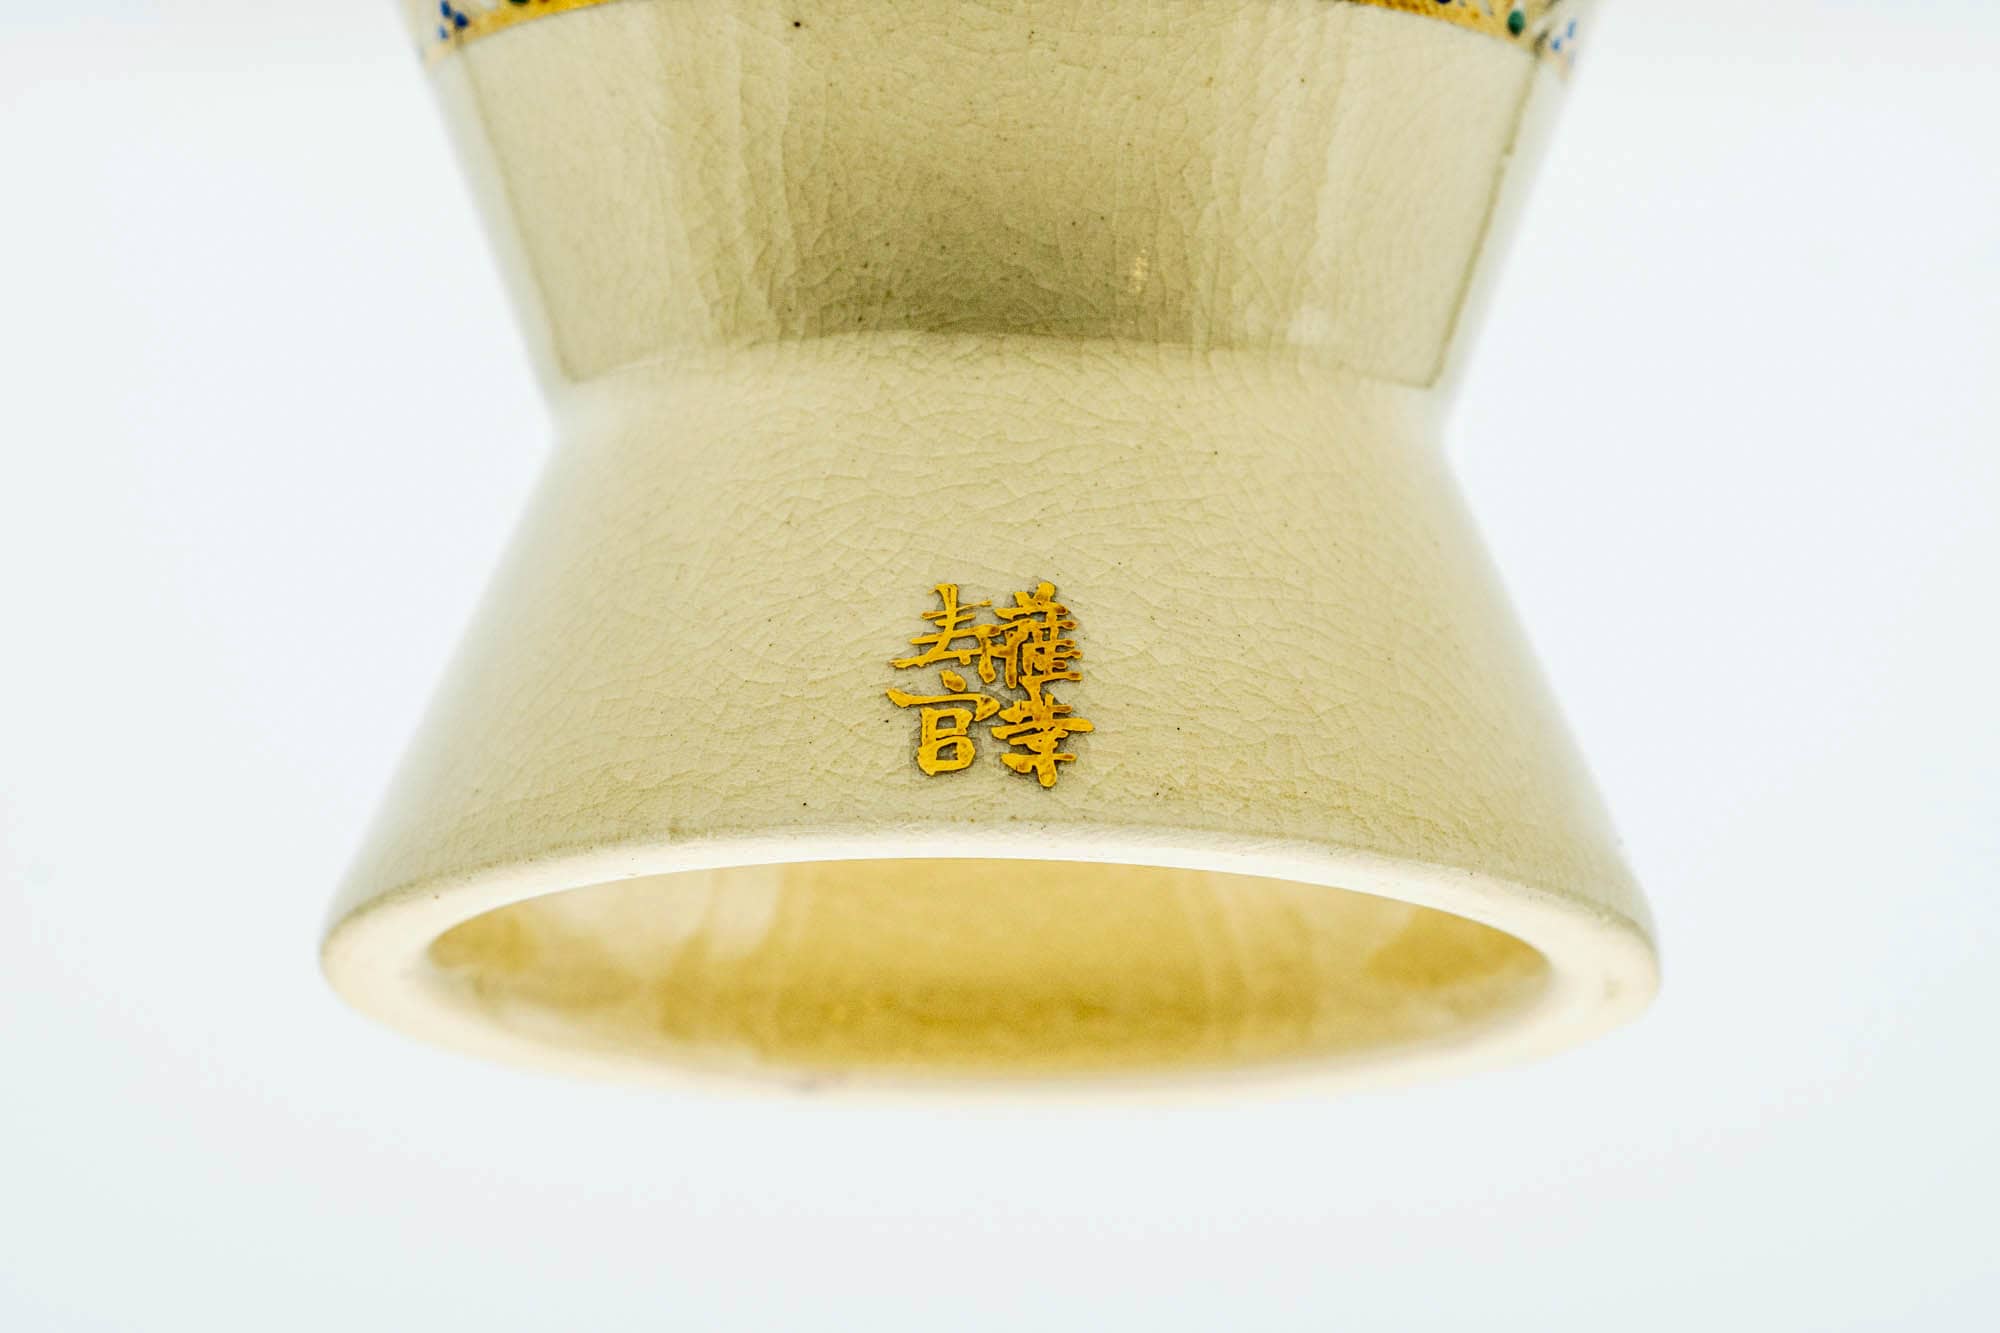 Japanese Futaoki - Beige Gold Geometric Patterned Ceramic Lid Rest